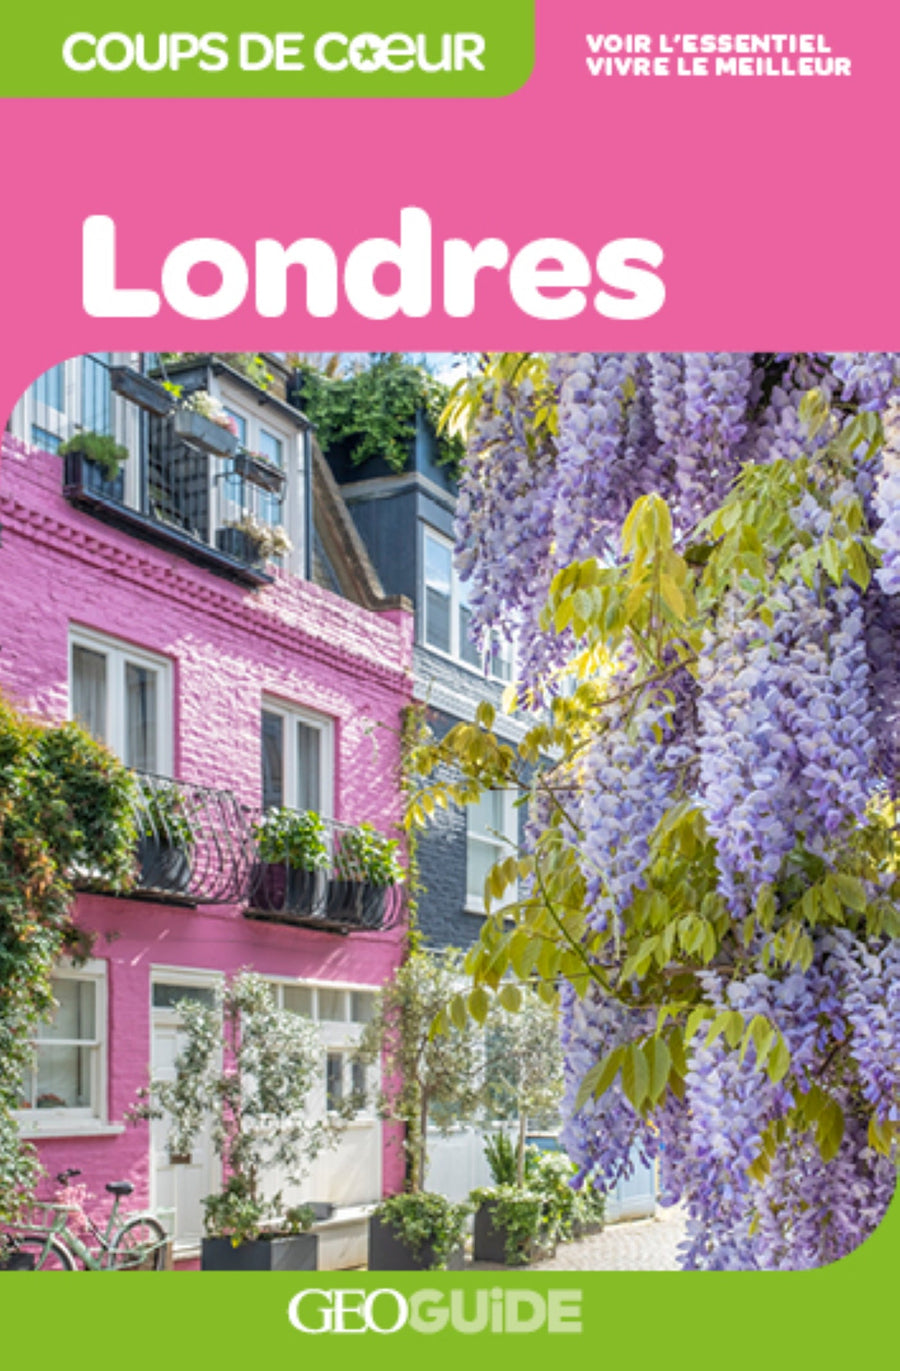 Géoguide (coups de coeur) - Londres | Gallimard guide de voyage Gallimard 